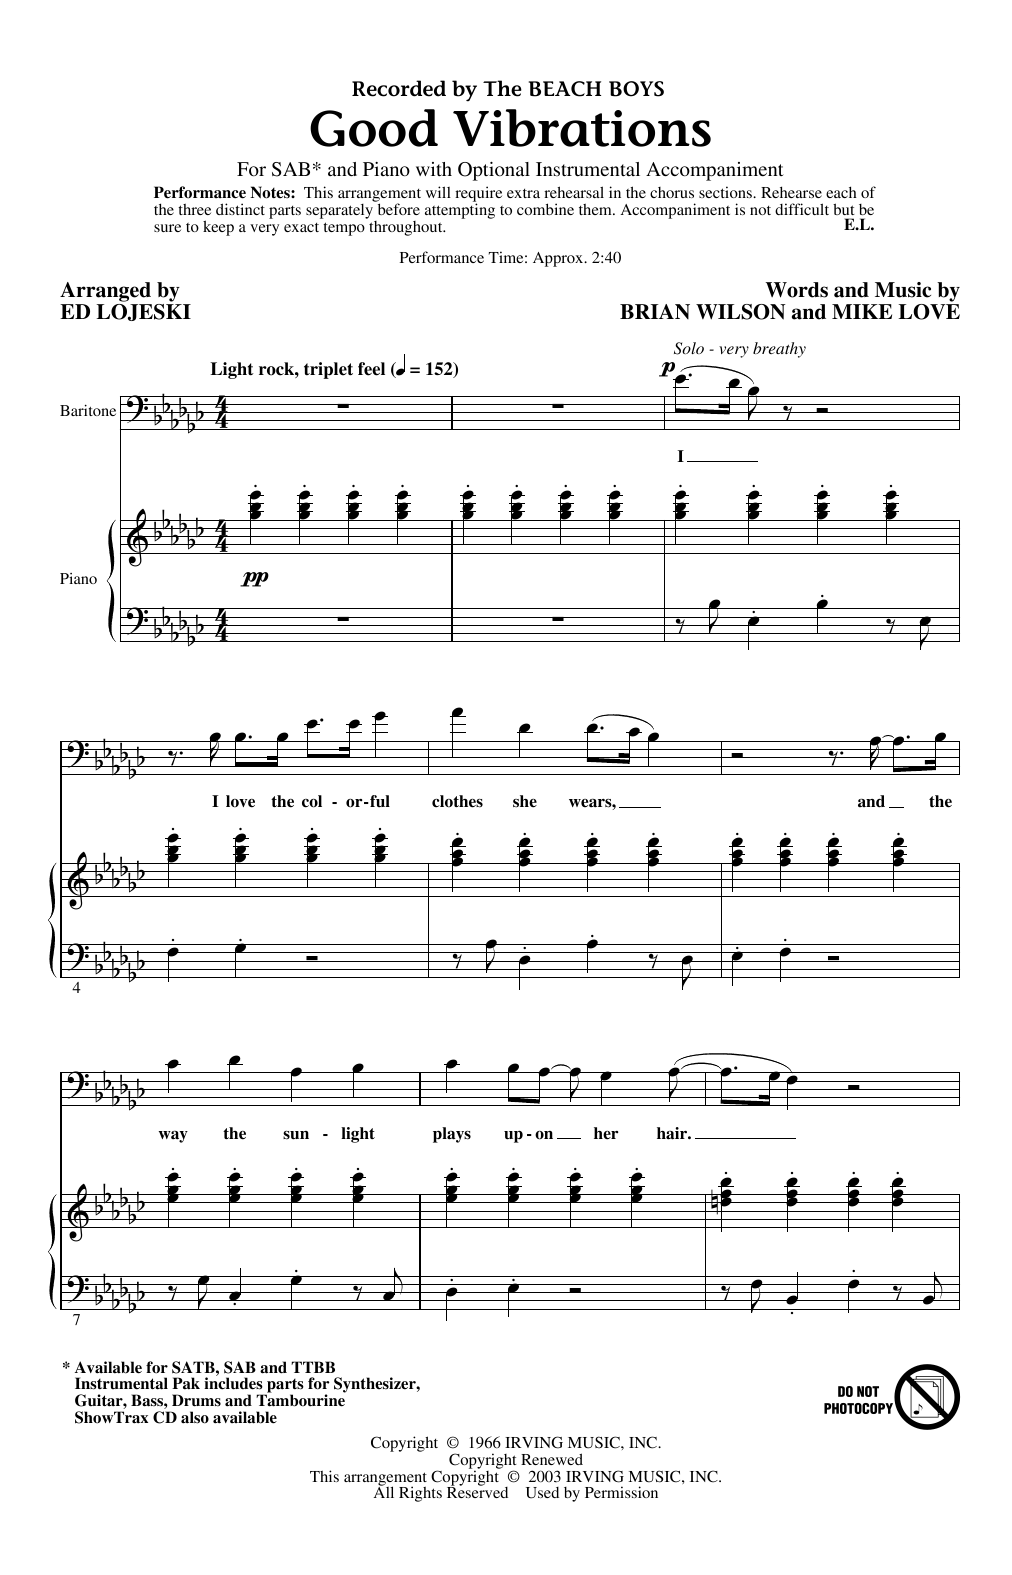 The Beach Boys Good Vibrations (arr. Ed Lojeski) Sheet Music Notes & Chords for SAB Choir - Download or Print PDF